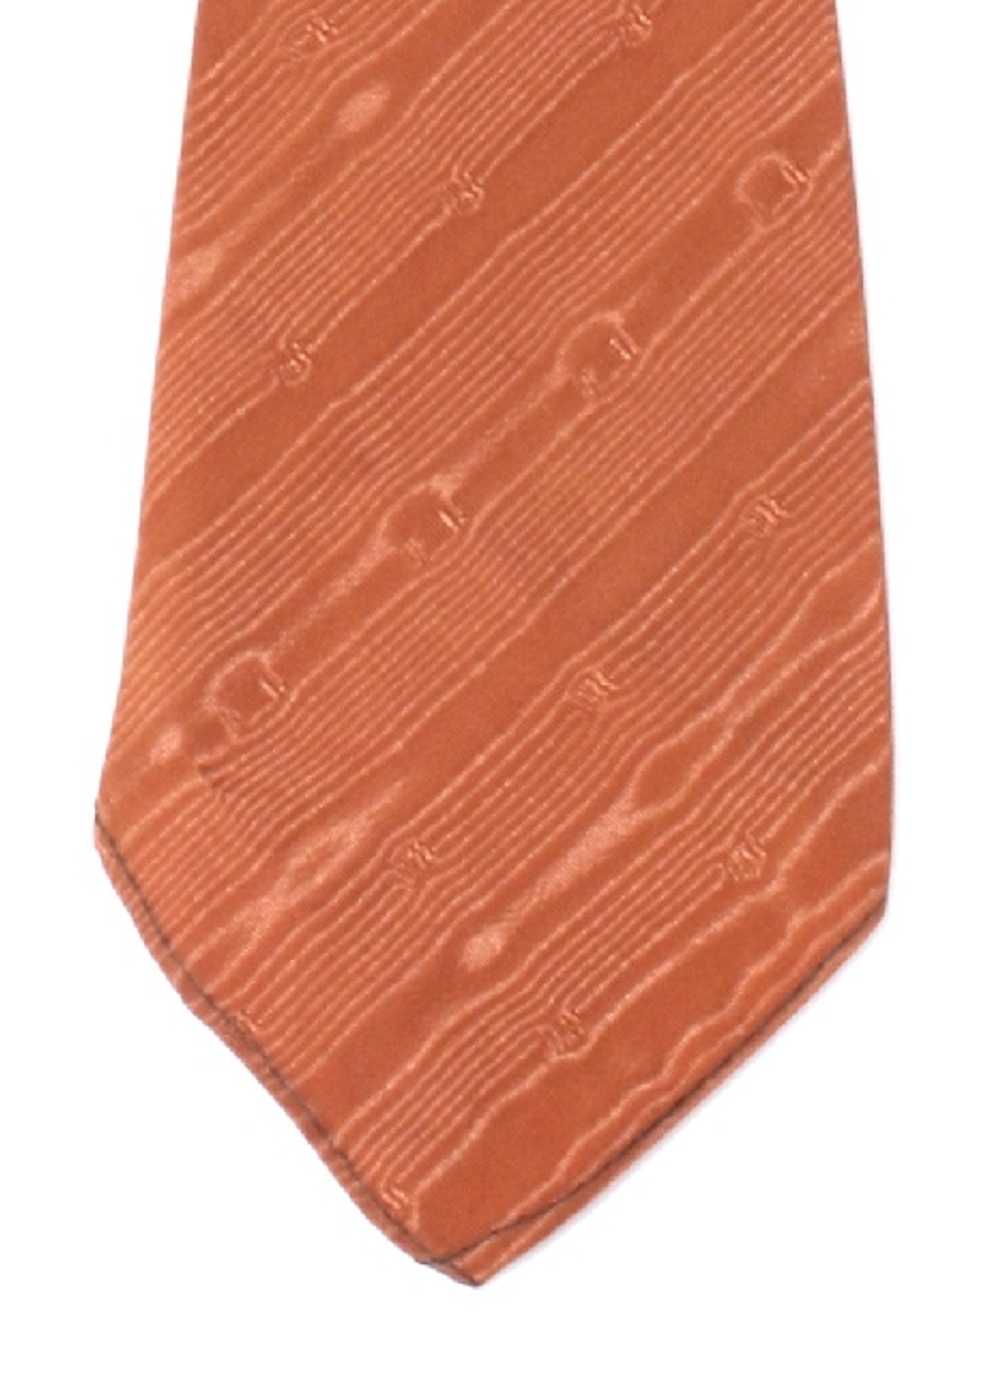 1930's Mens Necktie - image 2